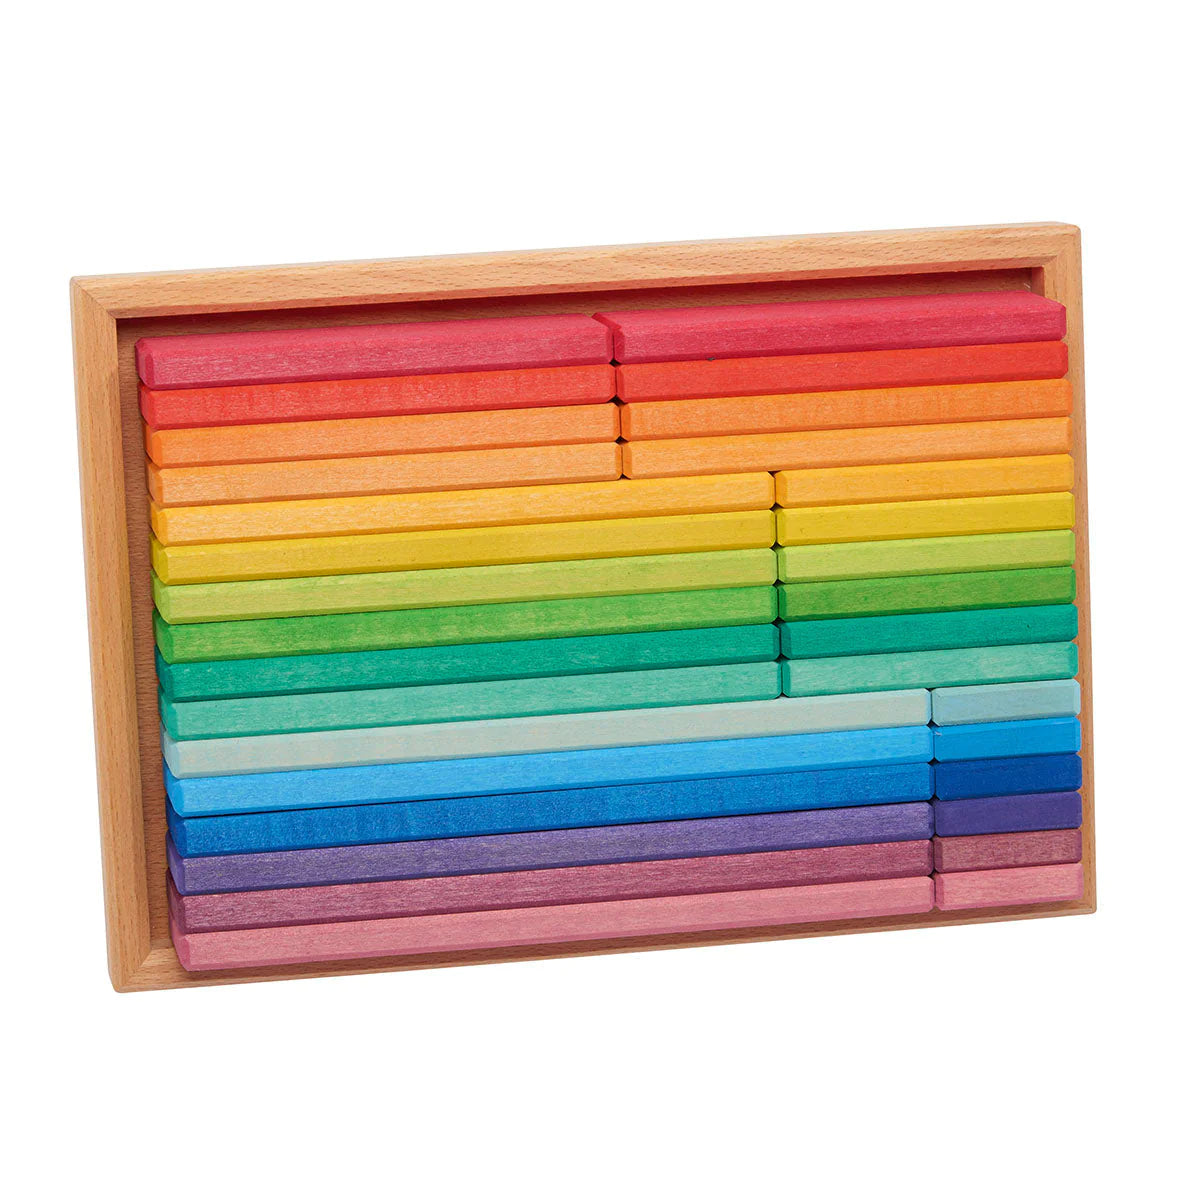 Gluckskafer Wooden Blocks - Rainbow Building Slats in Tray - 32 pieces